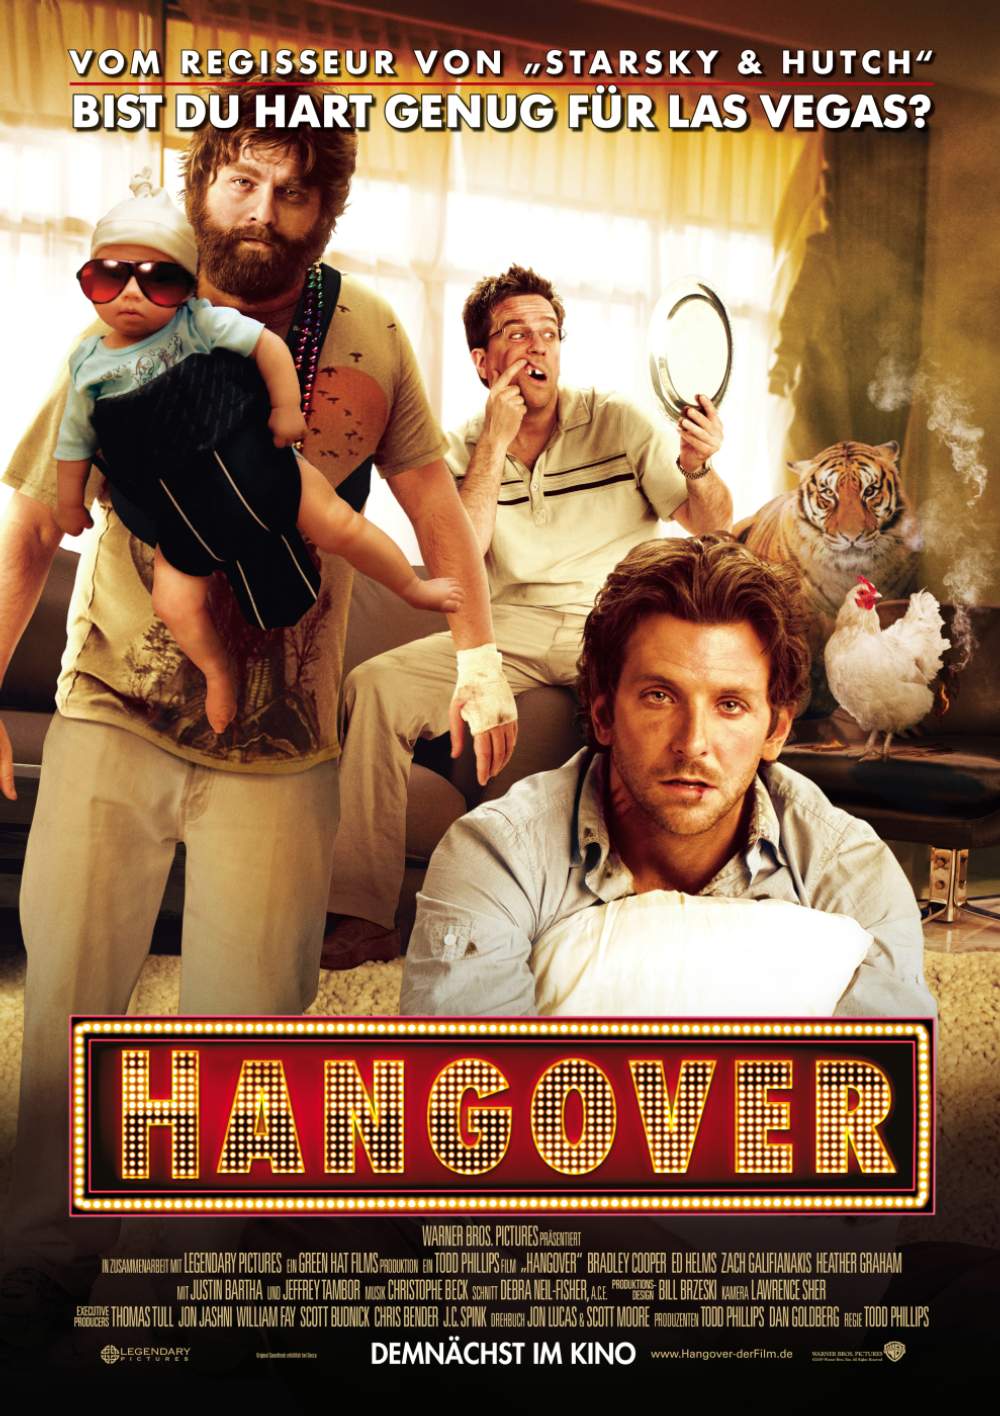 Hangover - Film